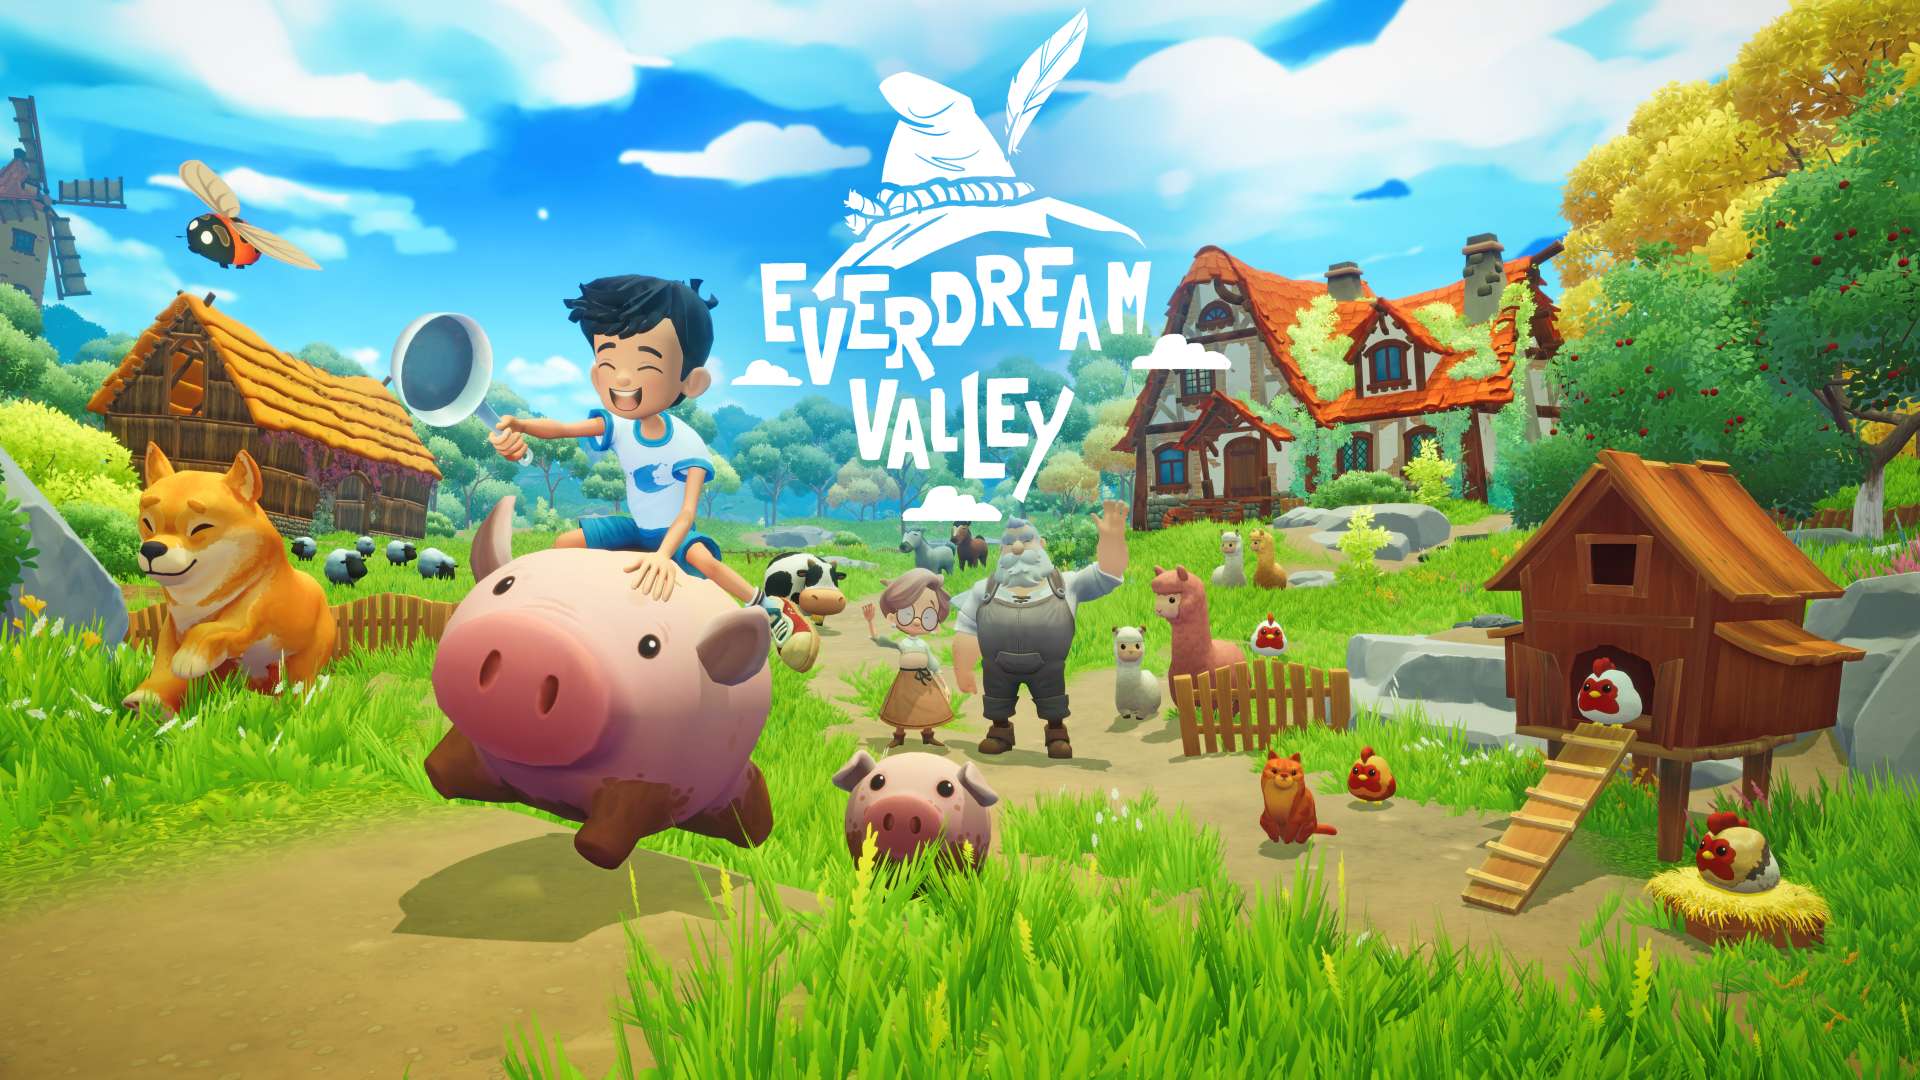 Everdream Valley arriva per PC, PS4, PS5 e Nintendo Switch